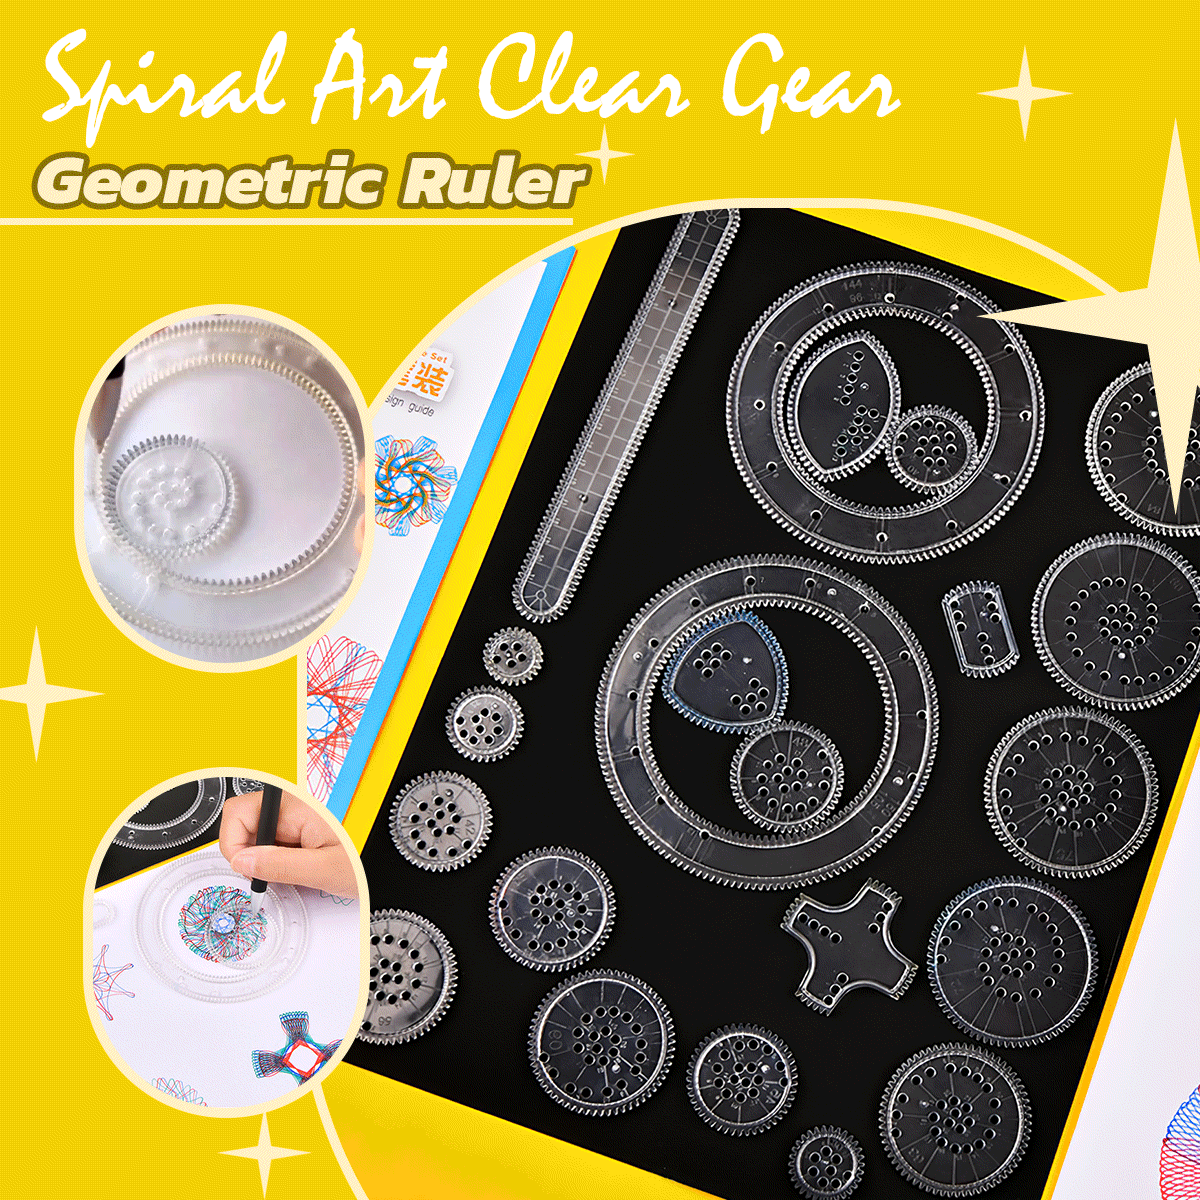 Spiral Art Clear Gear Geometric Ruler